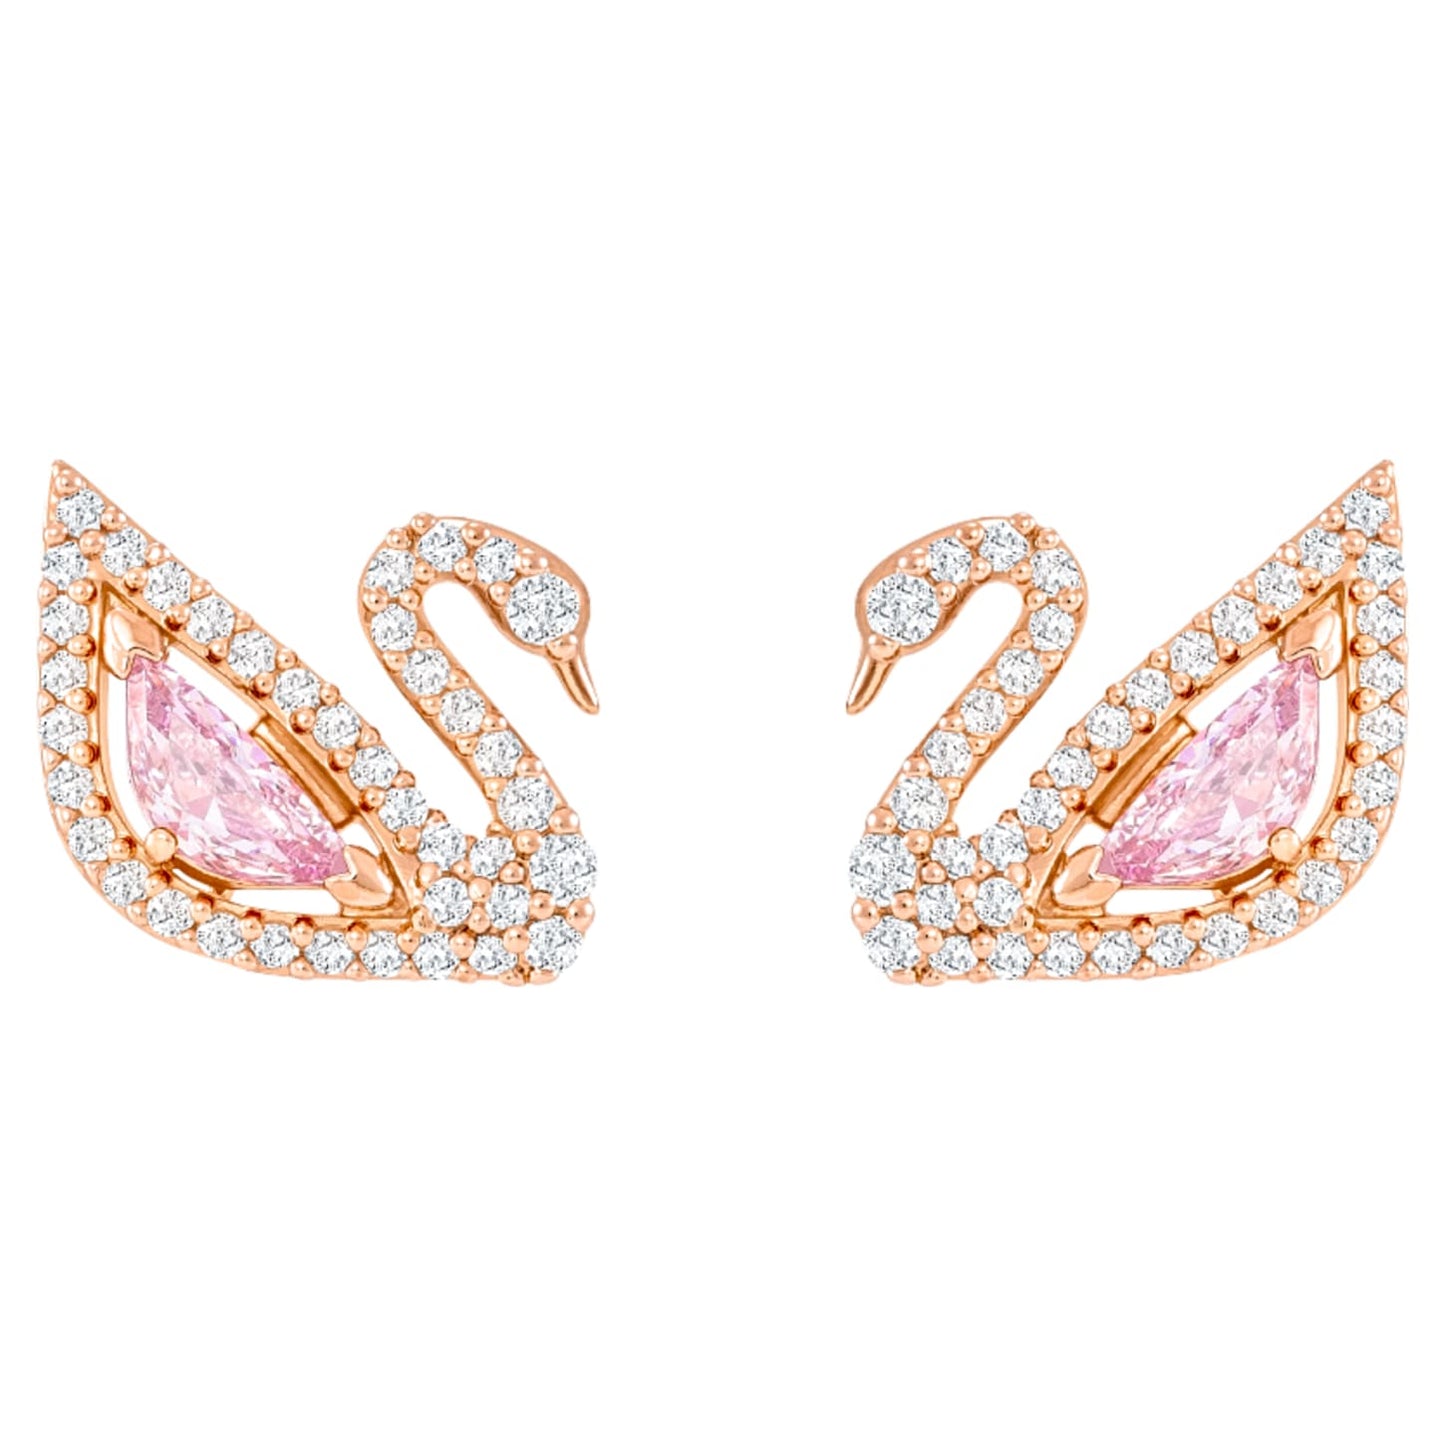 Bông tai thiên nga Swarovski - Dazzling Swan Pierced Earrings Pink Rose Gold - 2